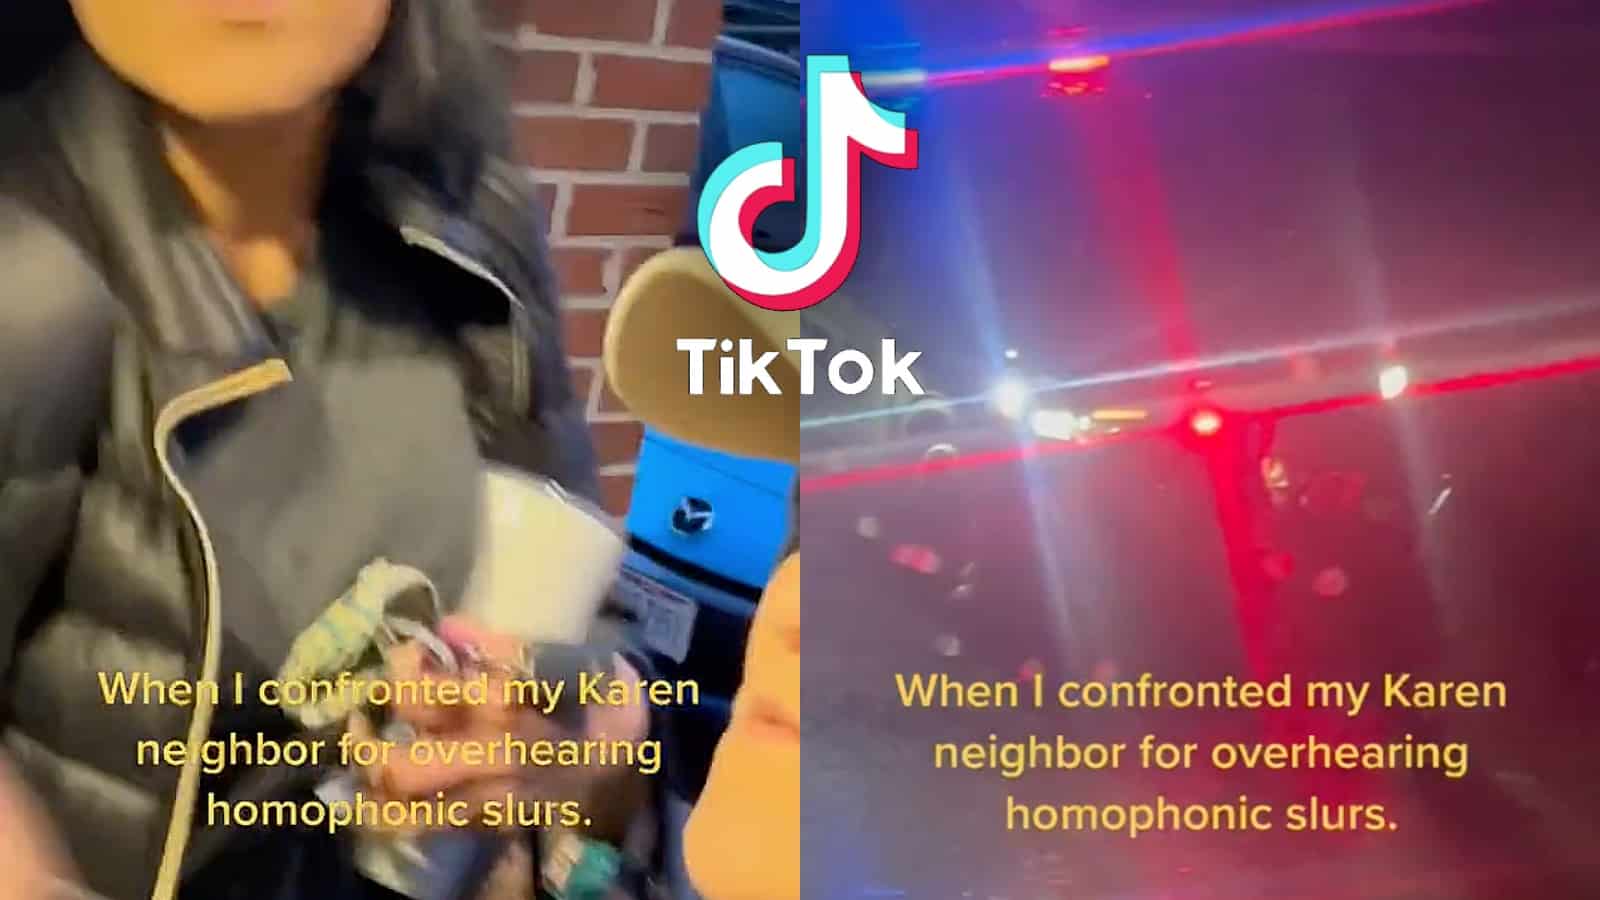 tiktok video screenshots of woman being arrested over "homophobic slurs"